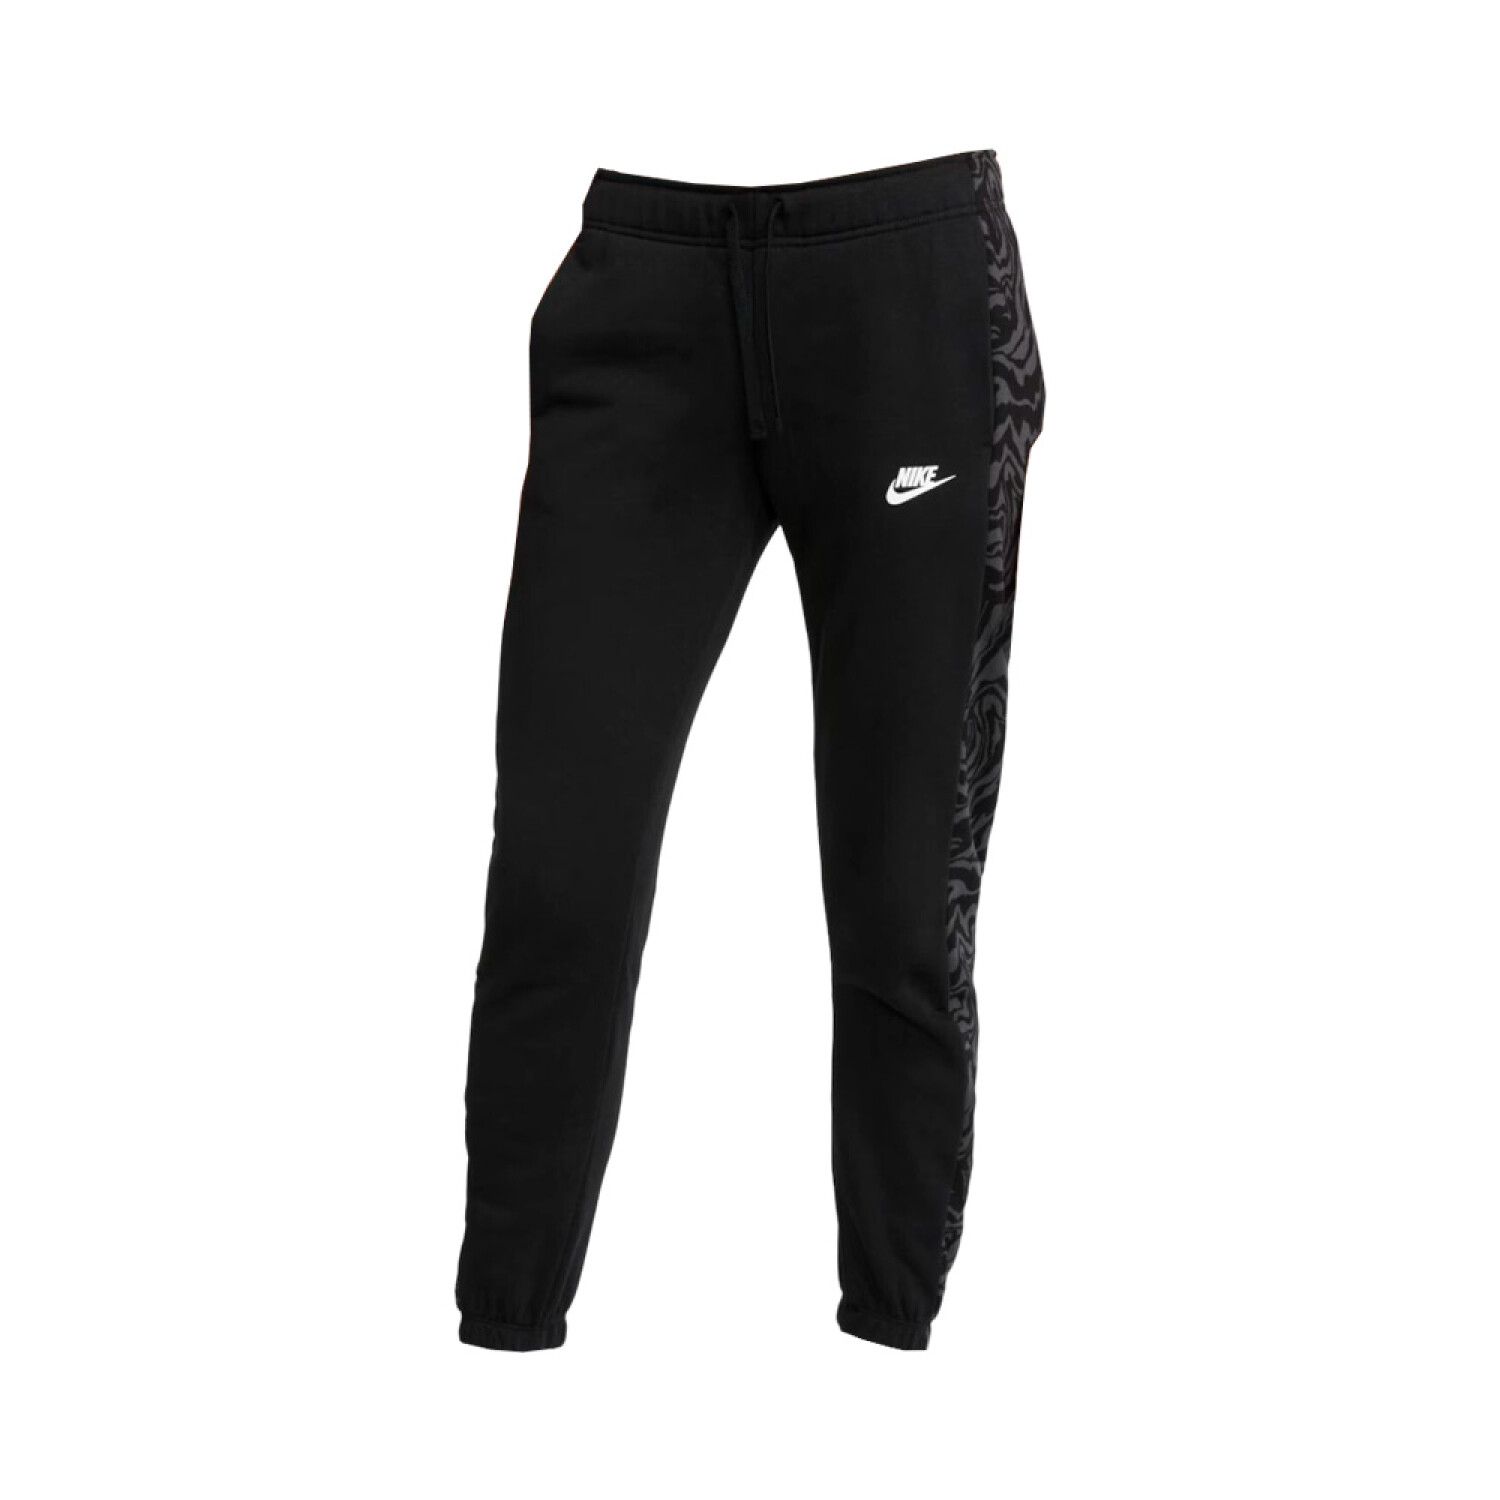 https://f.fcdn.app/imgs/969a94/www.globalsports.com.uy/gls/0d8b/original/catalogo/NKDV7946-010-1/1500-1500/pantalon-nike-sportswear-club-black.jpg